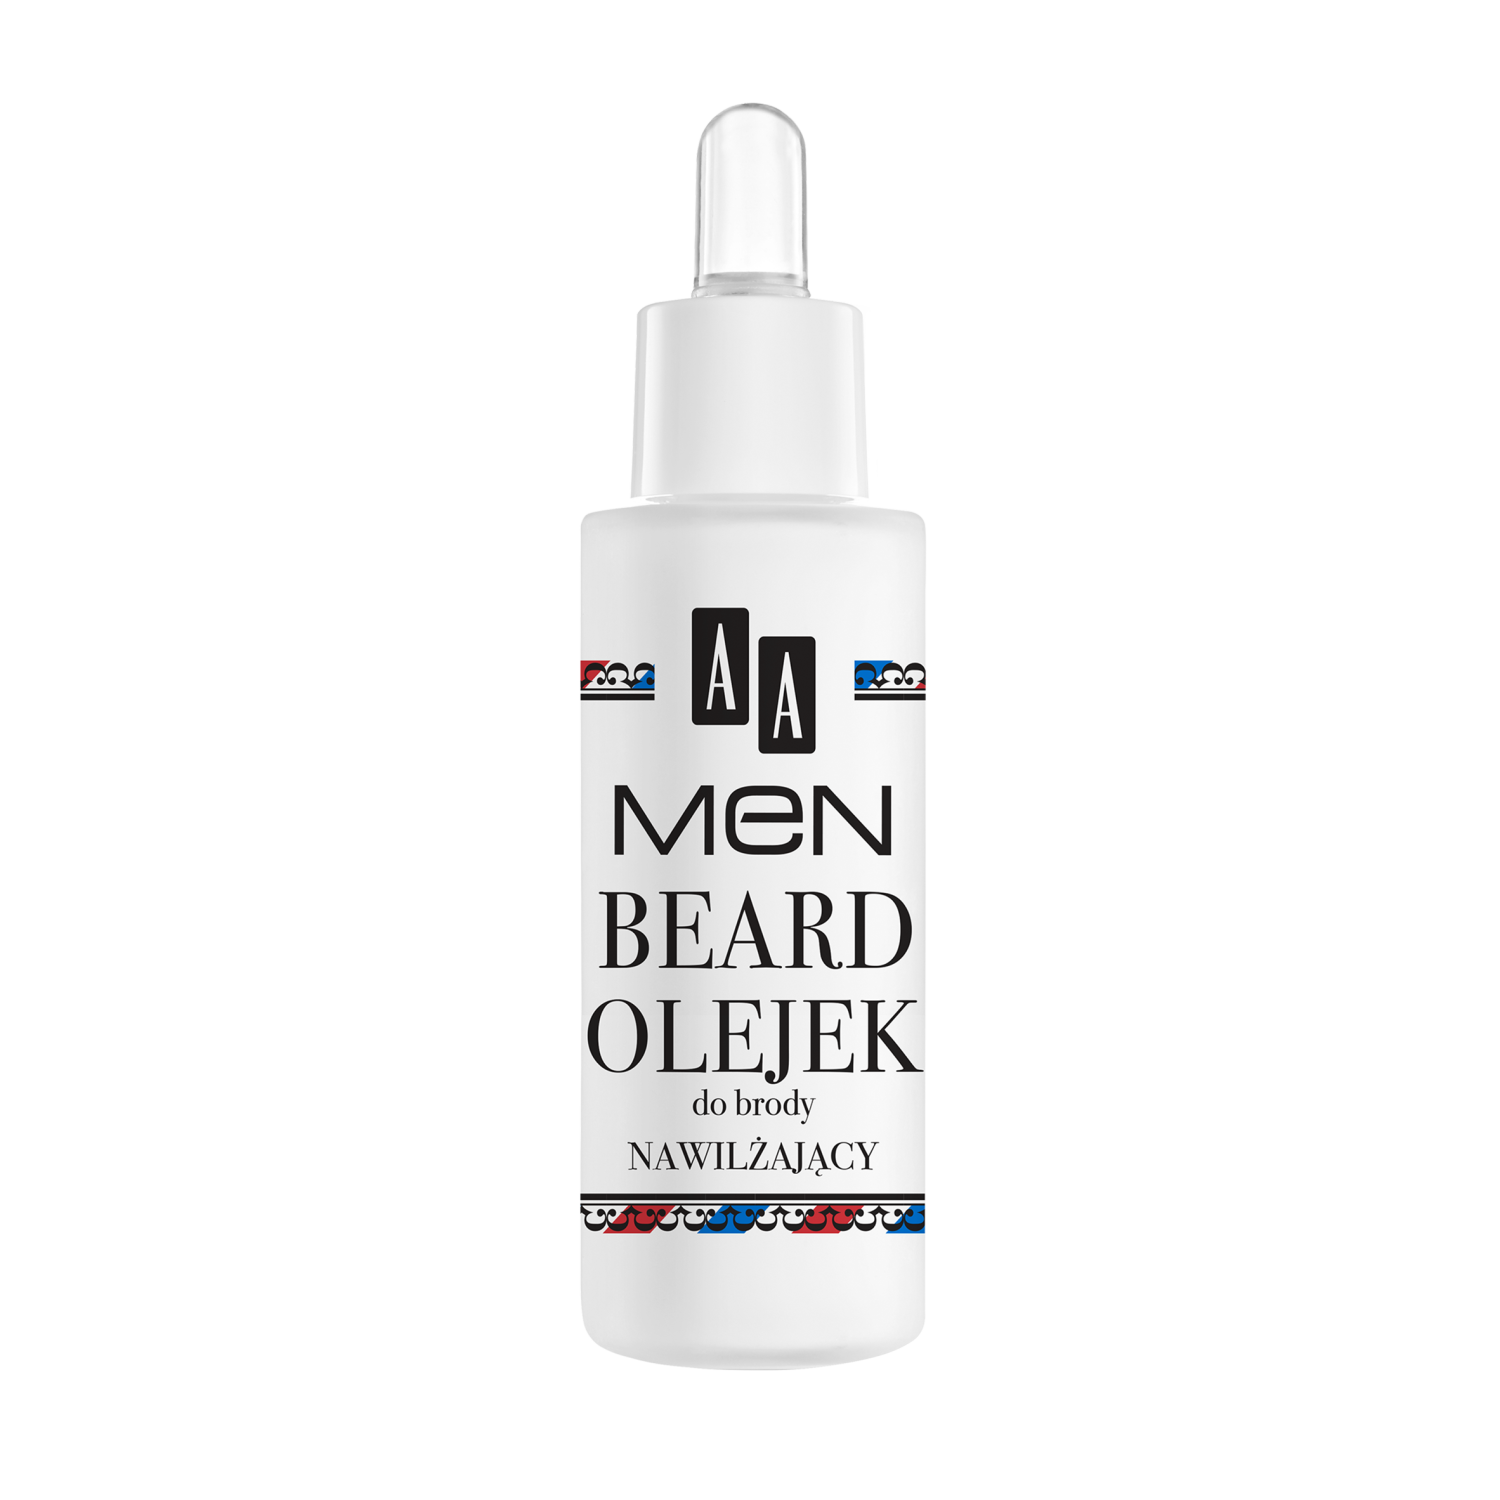 AA Men Beard увлажняющее масло для бороды, 30 мл цена и фото